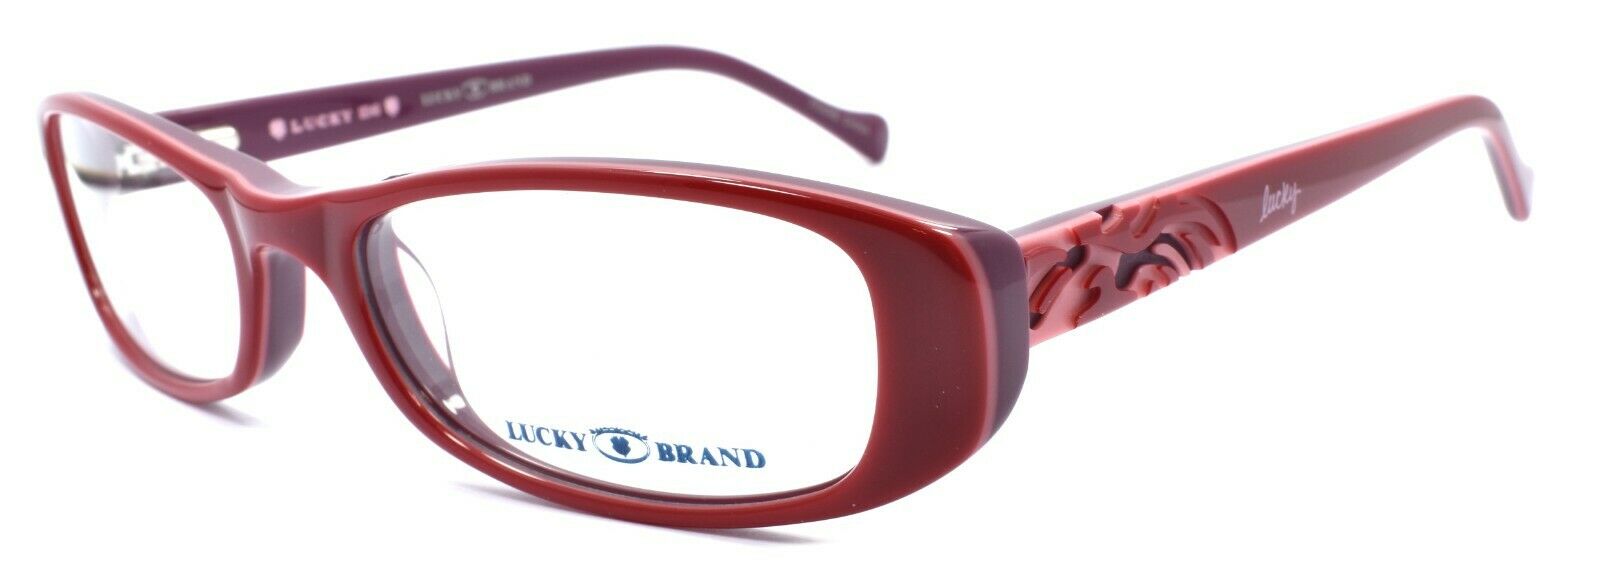 1-LUCKY BRAND Spark Plug Kids Girls Eyeglasses Frames 49-16-130 Red + CASE-751286246179-IKSpecs